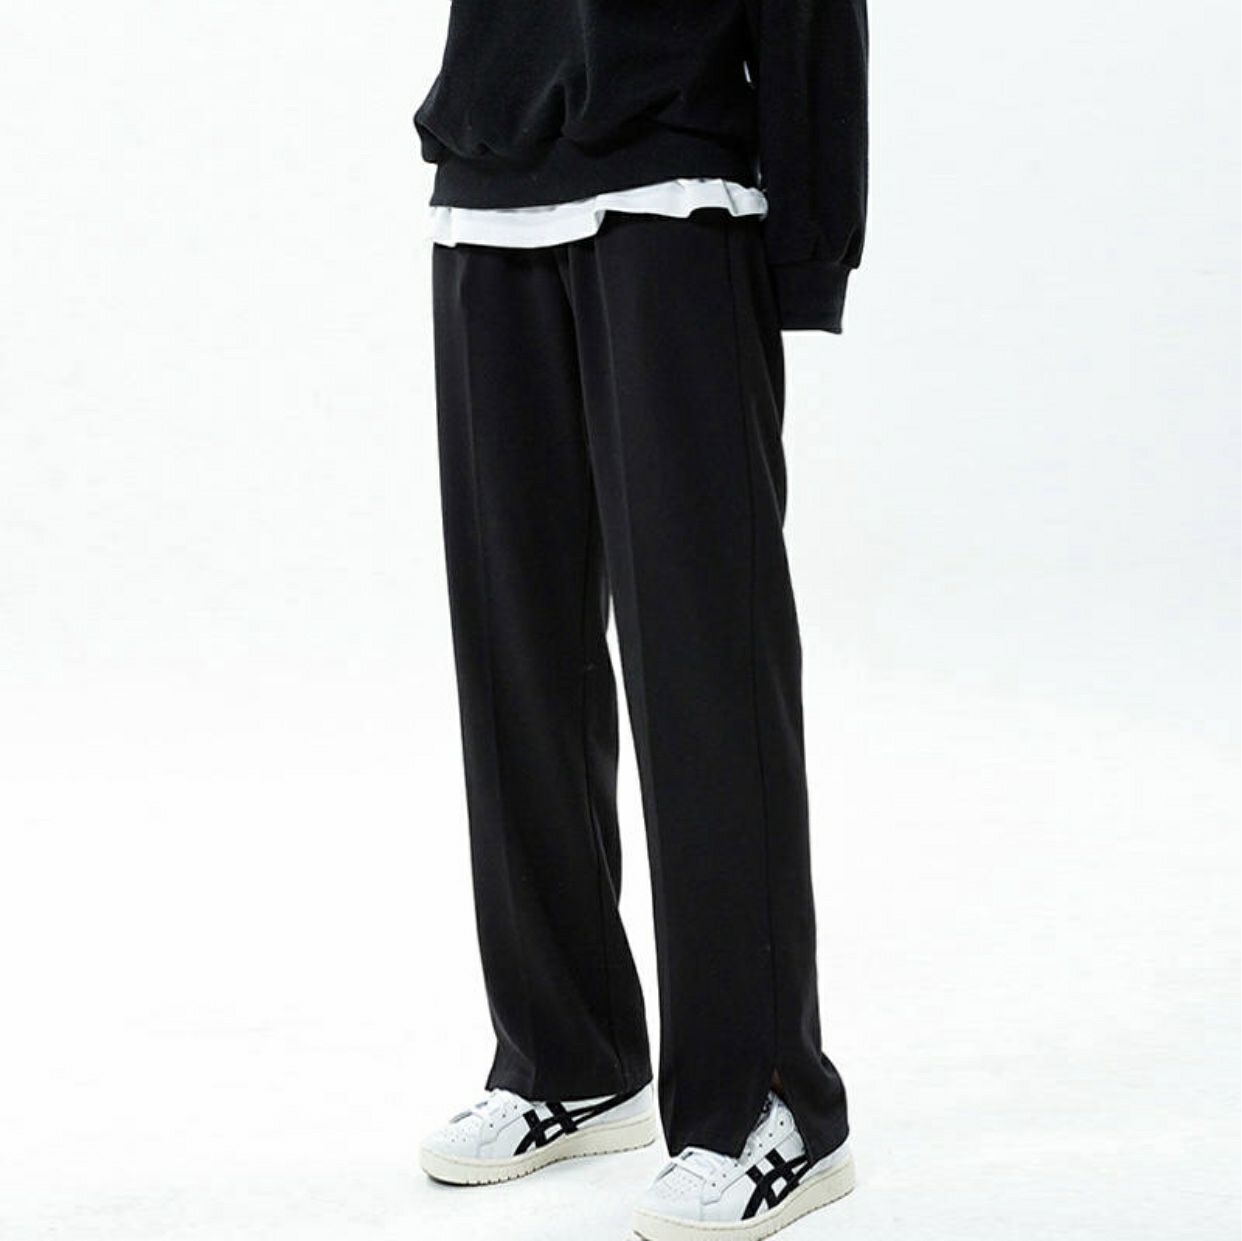 Cotton Formal Pant Down Side Zipper For Men - Black Colored, Multisize, Fashion